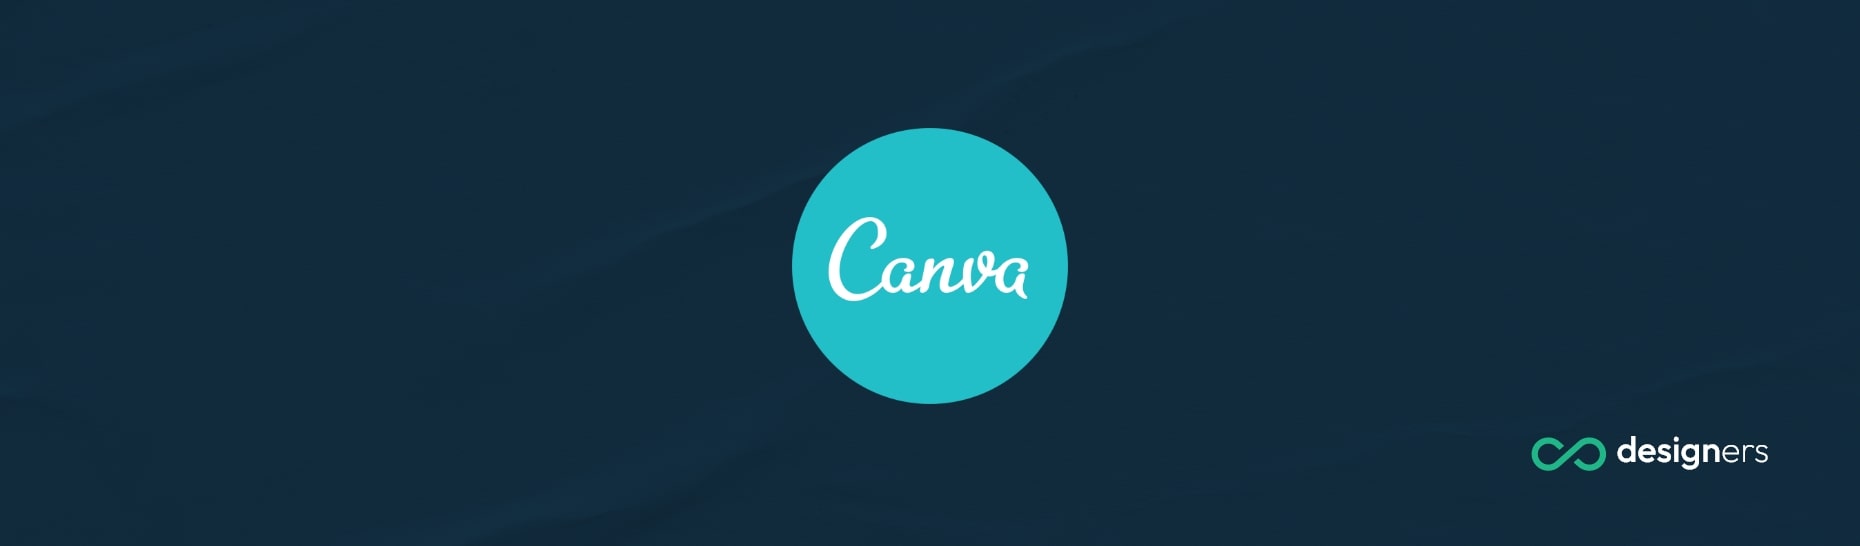 Why Does My Canva App Keep Crashing?